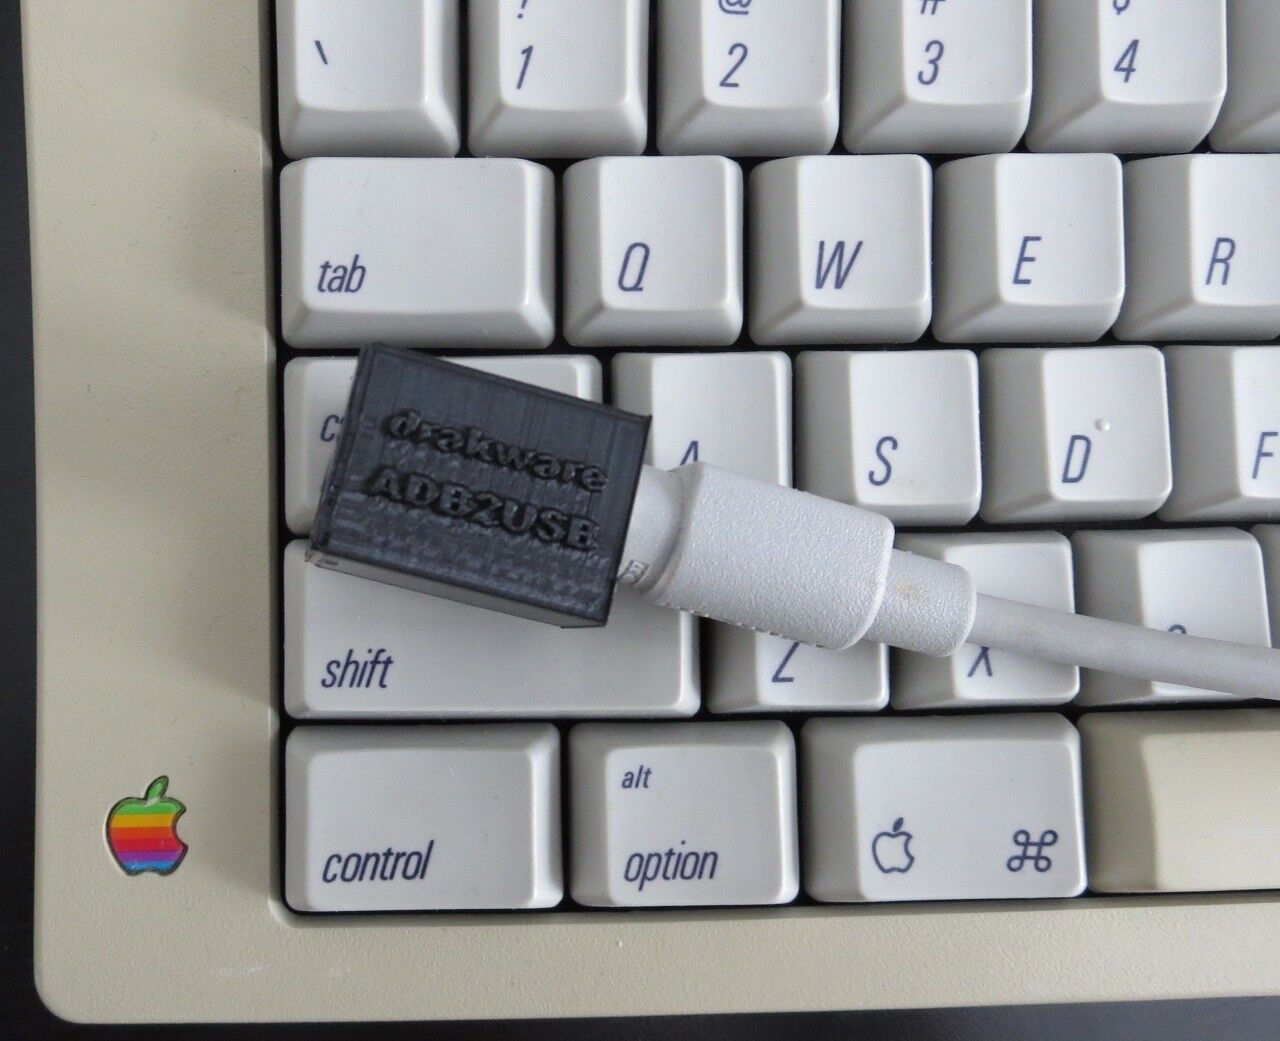 Drakware ADB2USB - vintage Apple ADB to USB keyboard adapter